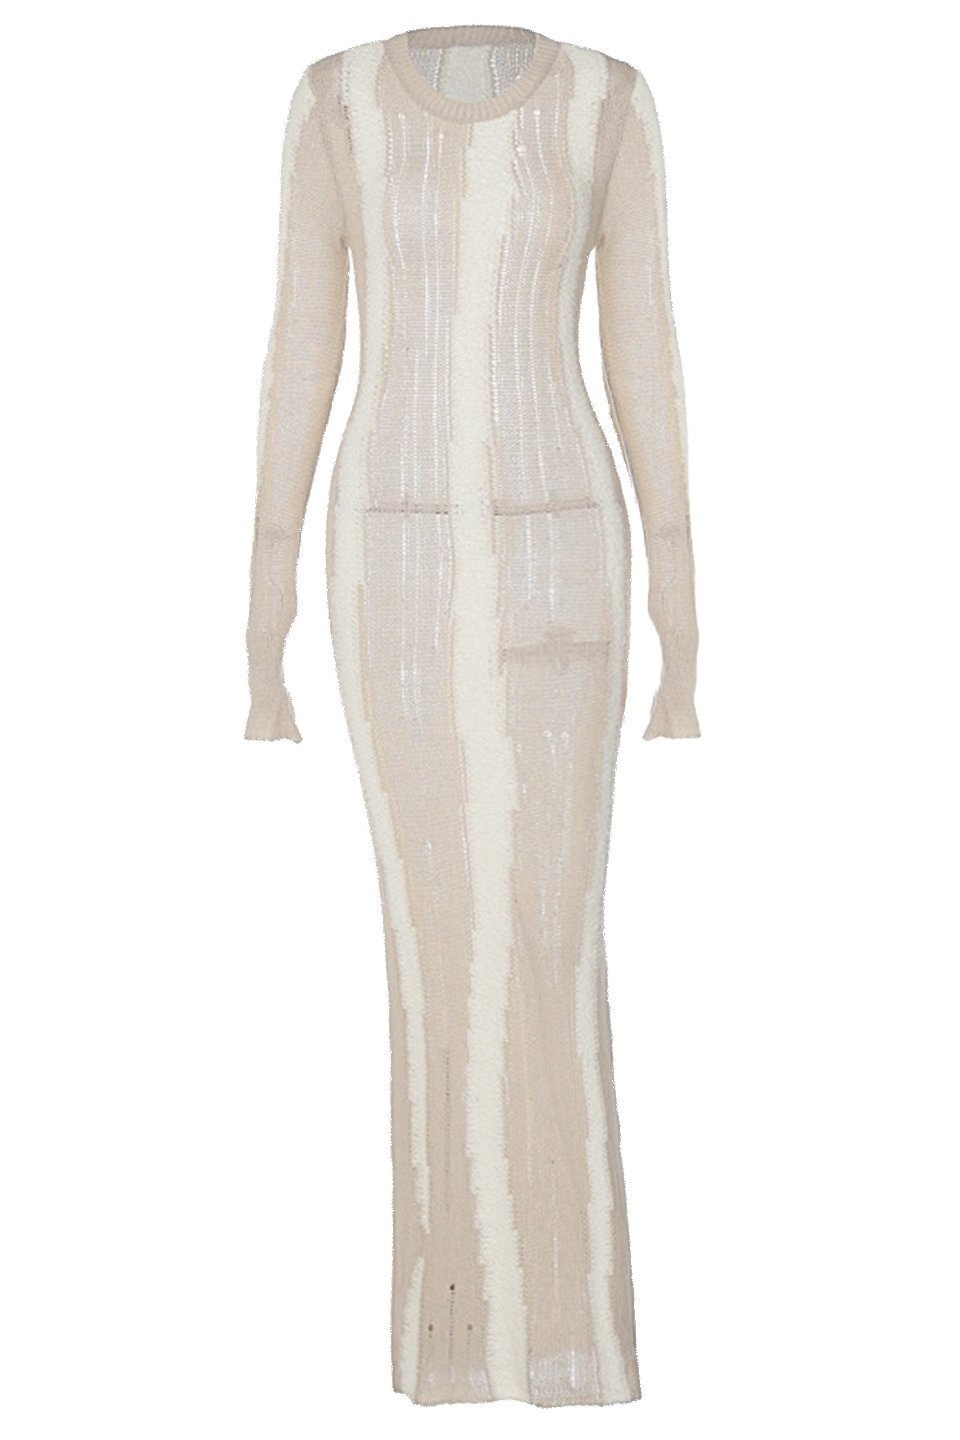 -Ruth Splicing Textured Knit Maxi Dress-SD00611301995-White-S - Sunfere